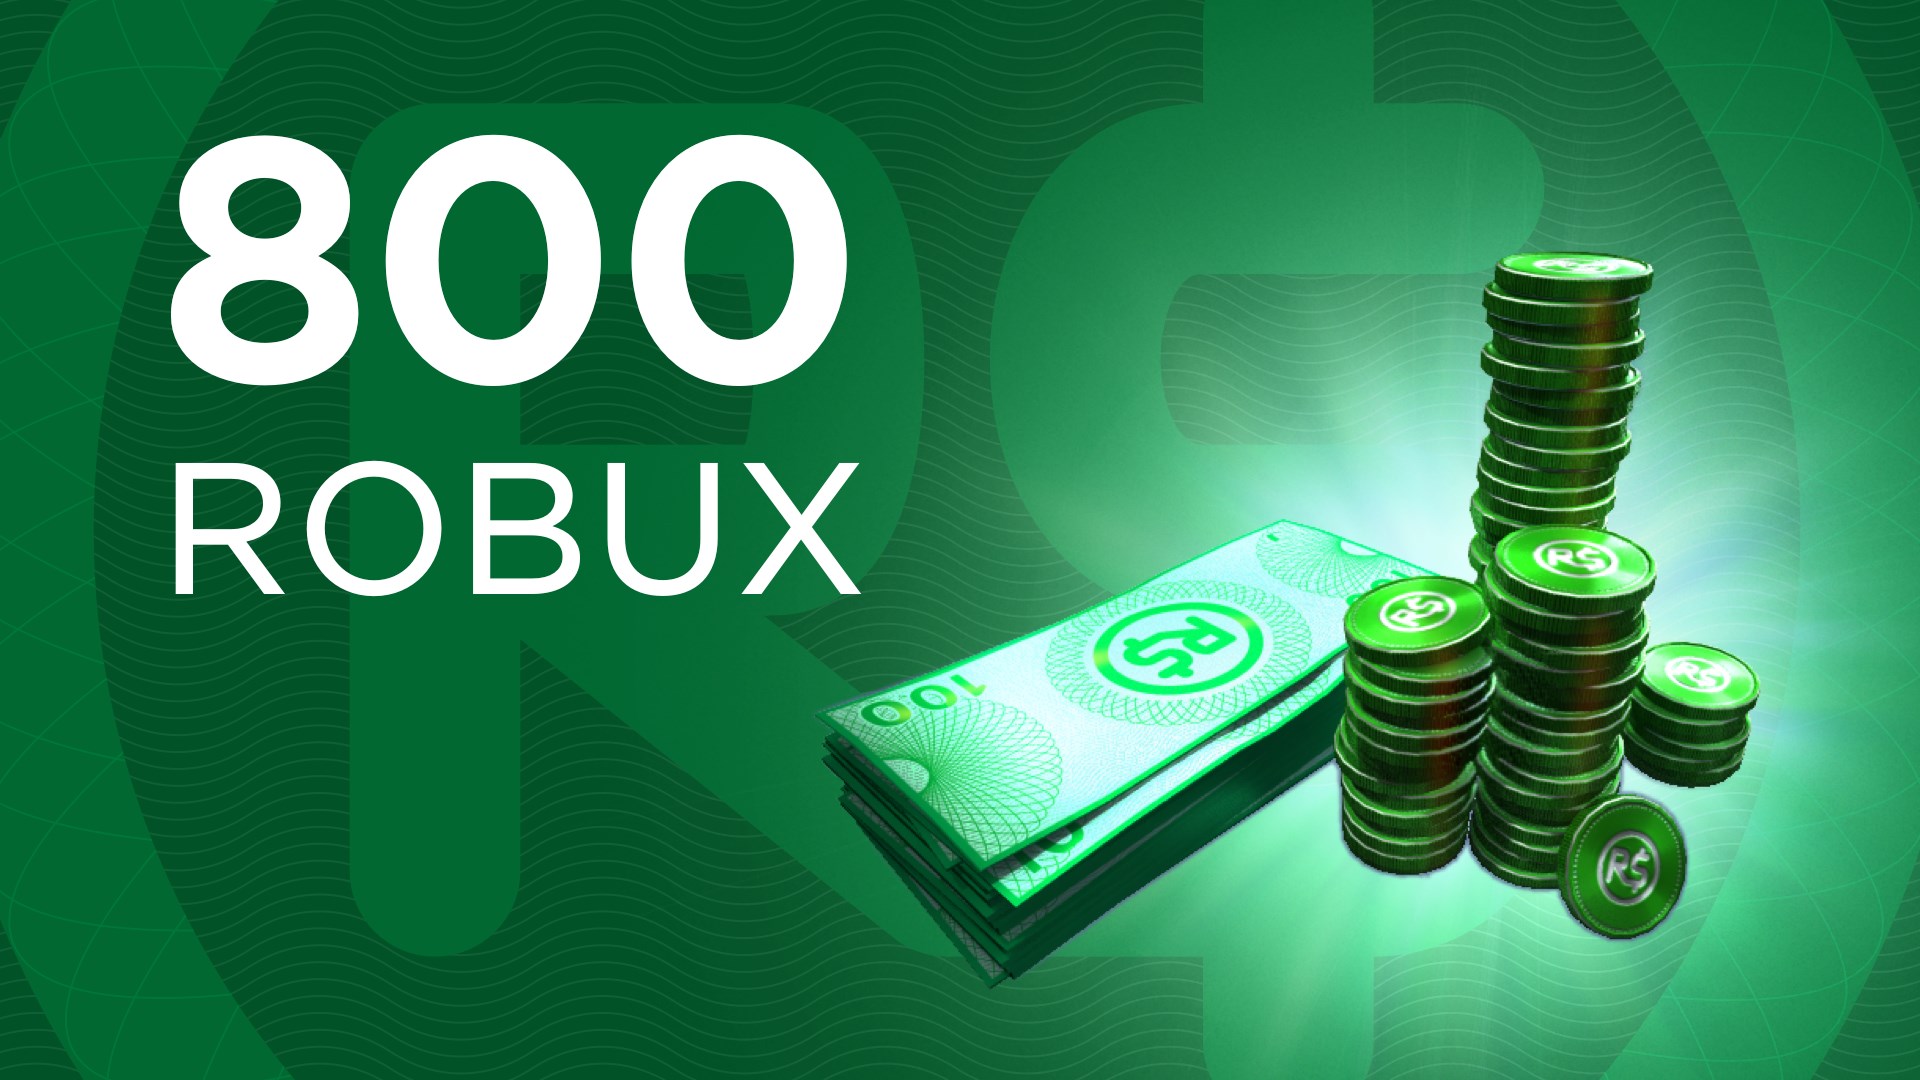 Buy 800 Robux For Xbox Microsoft Store - category como tener robux gratis en roblox 2017 espa#U00f1ol